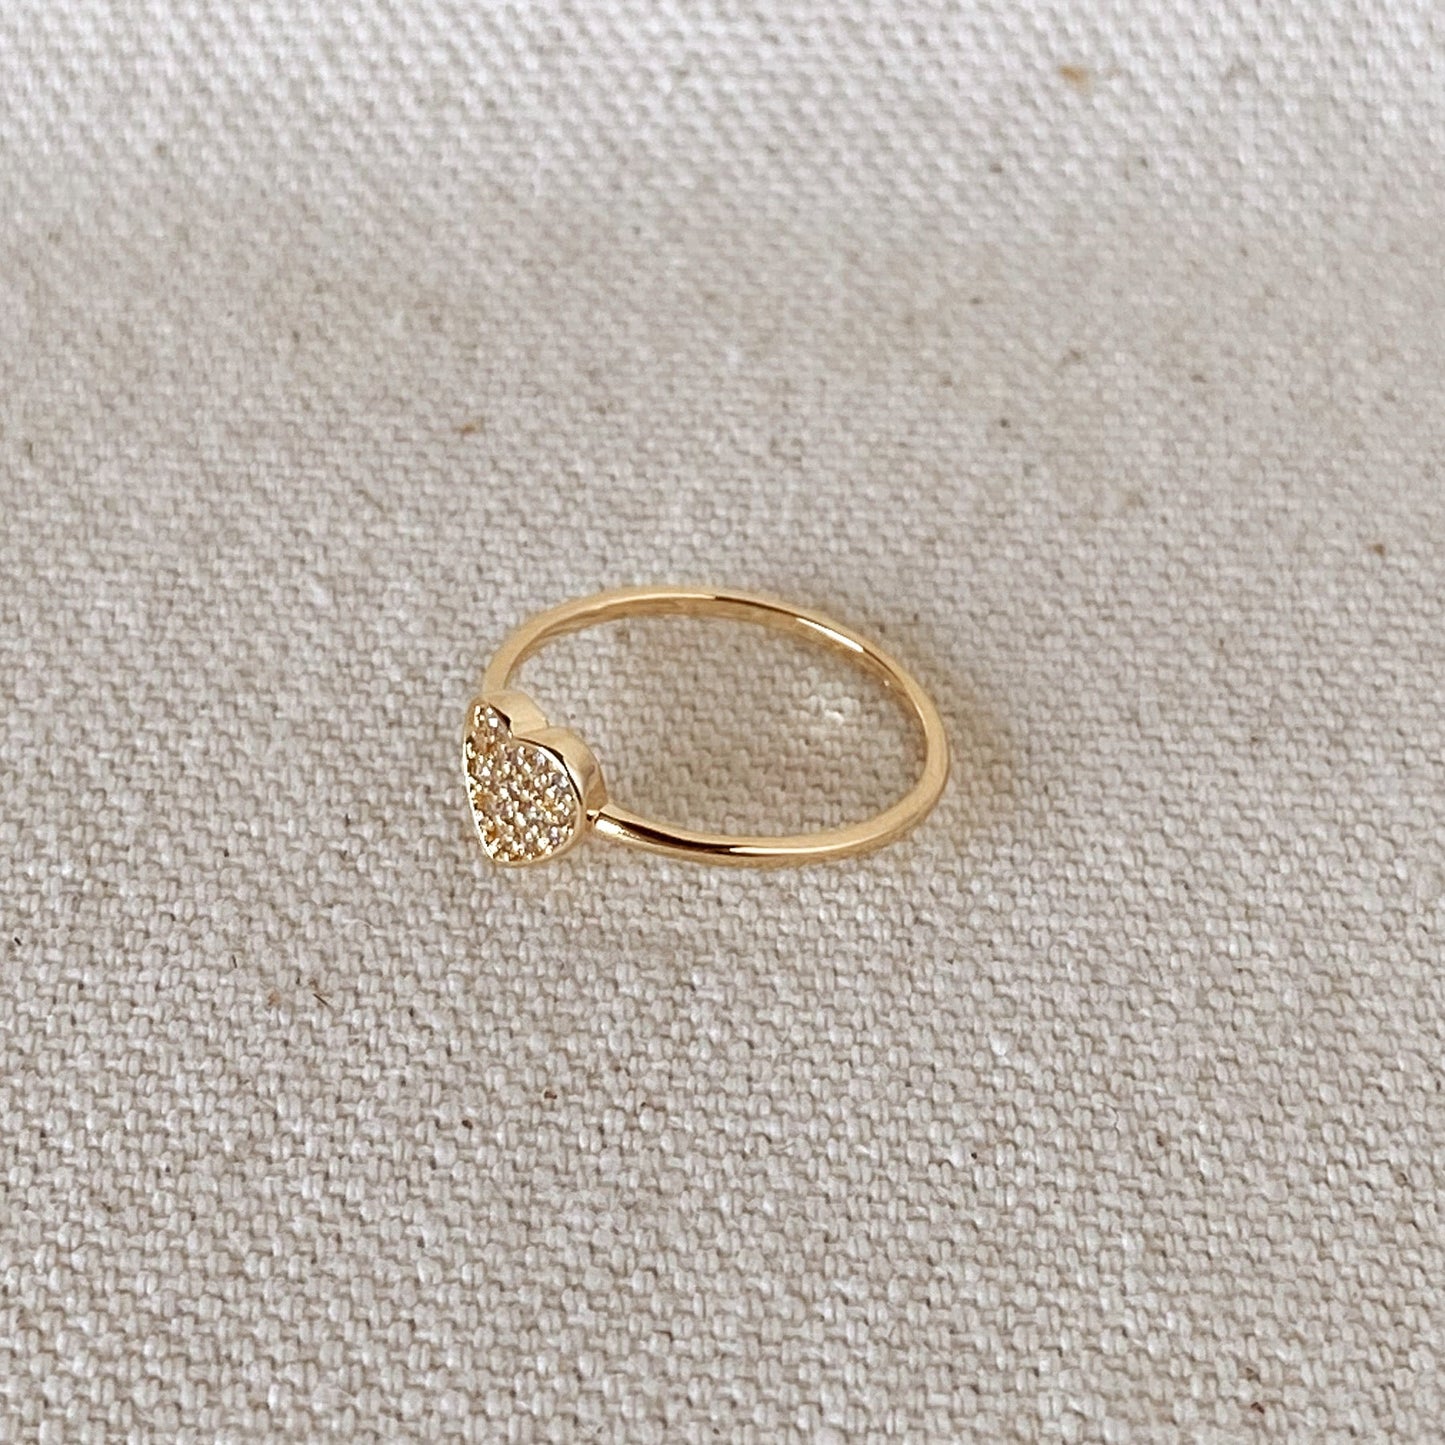 GoldFi 18k Gold Filled Dainty Cubic Zirconia Heart Ring